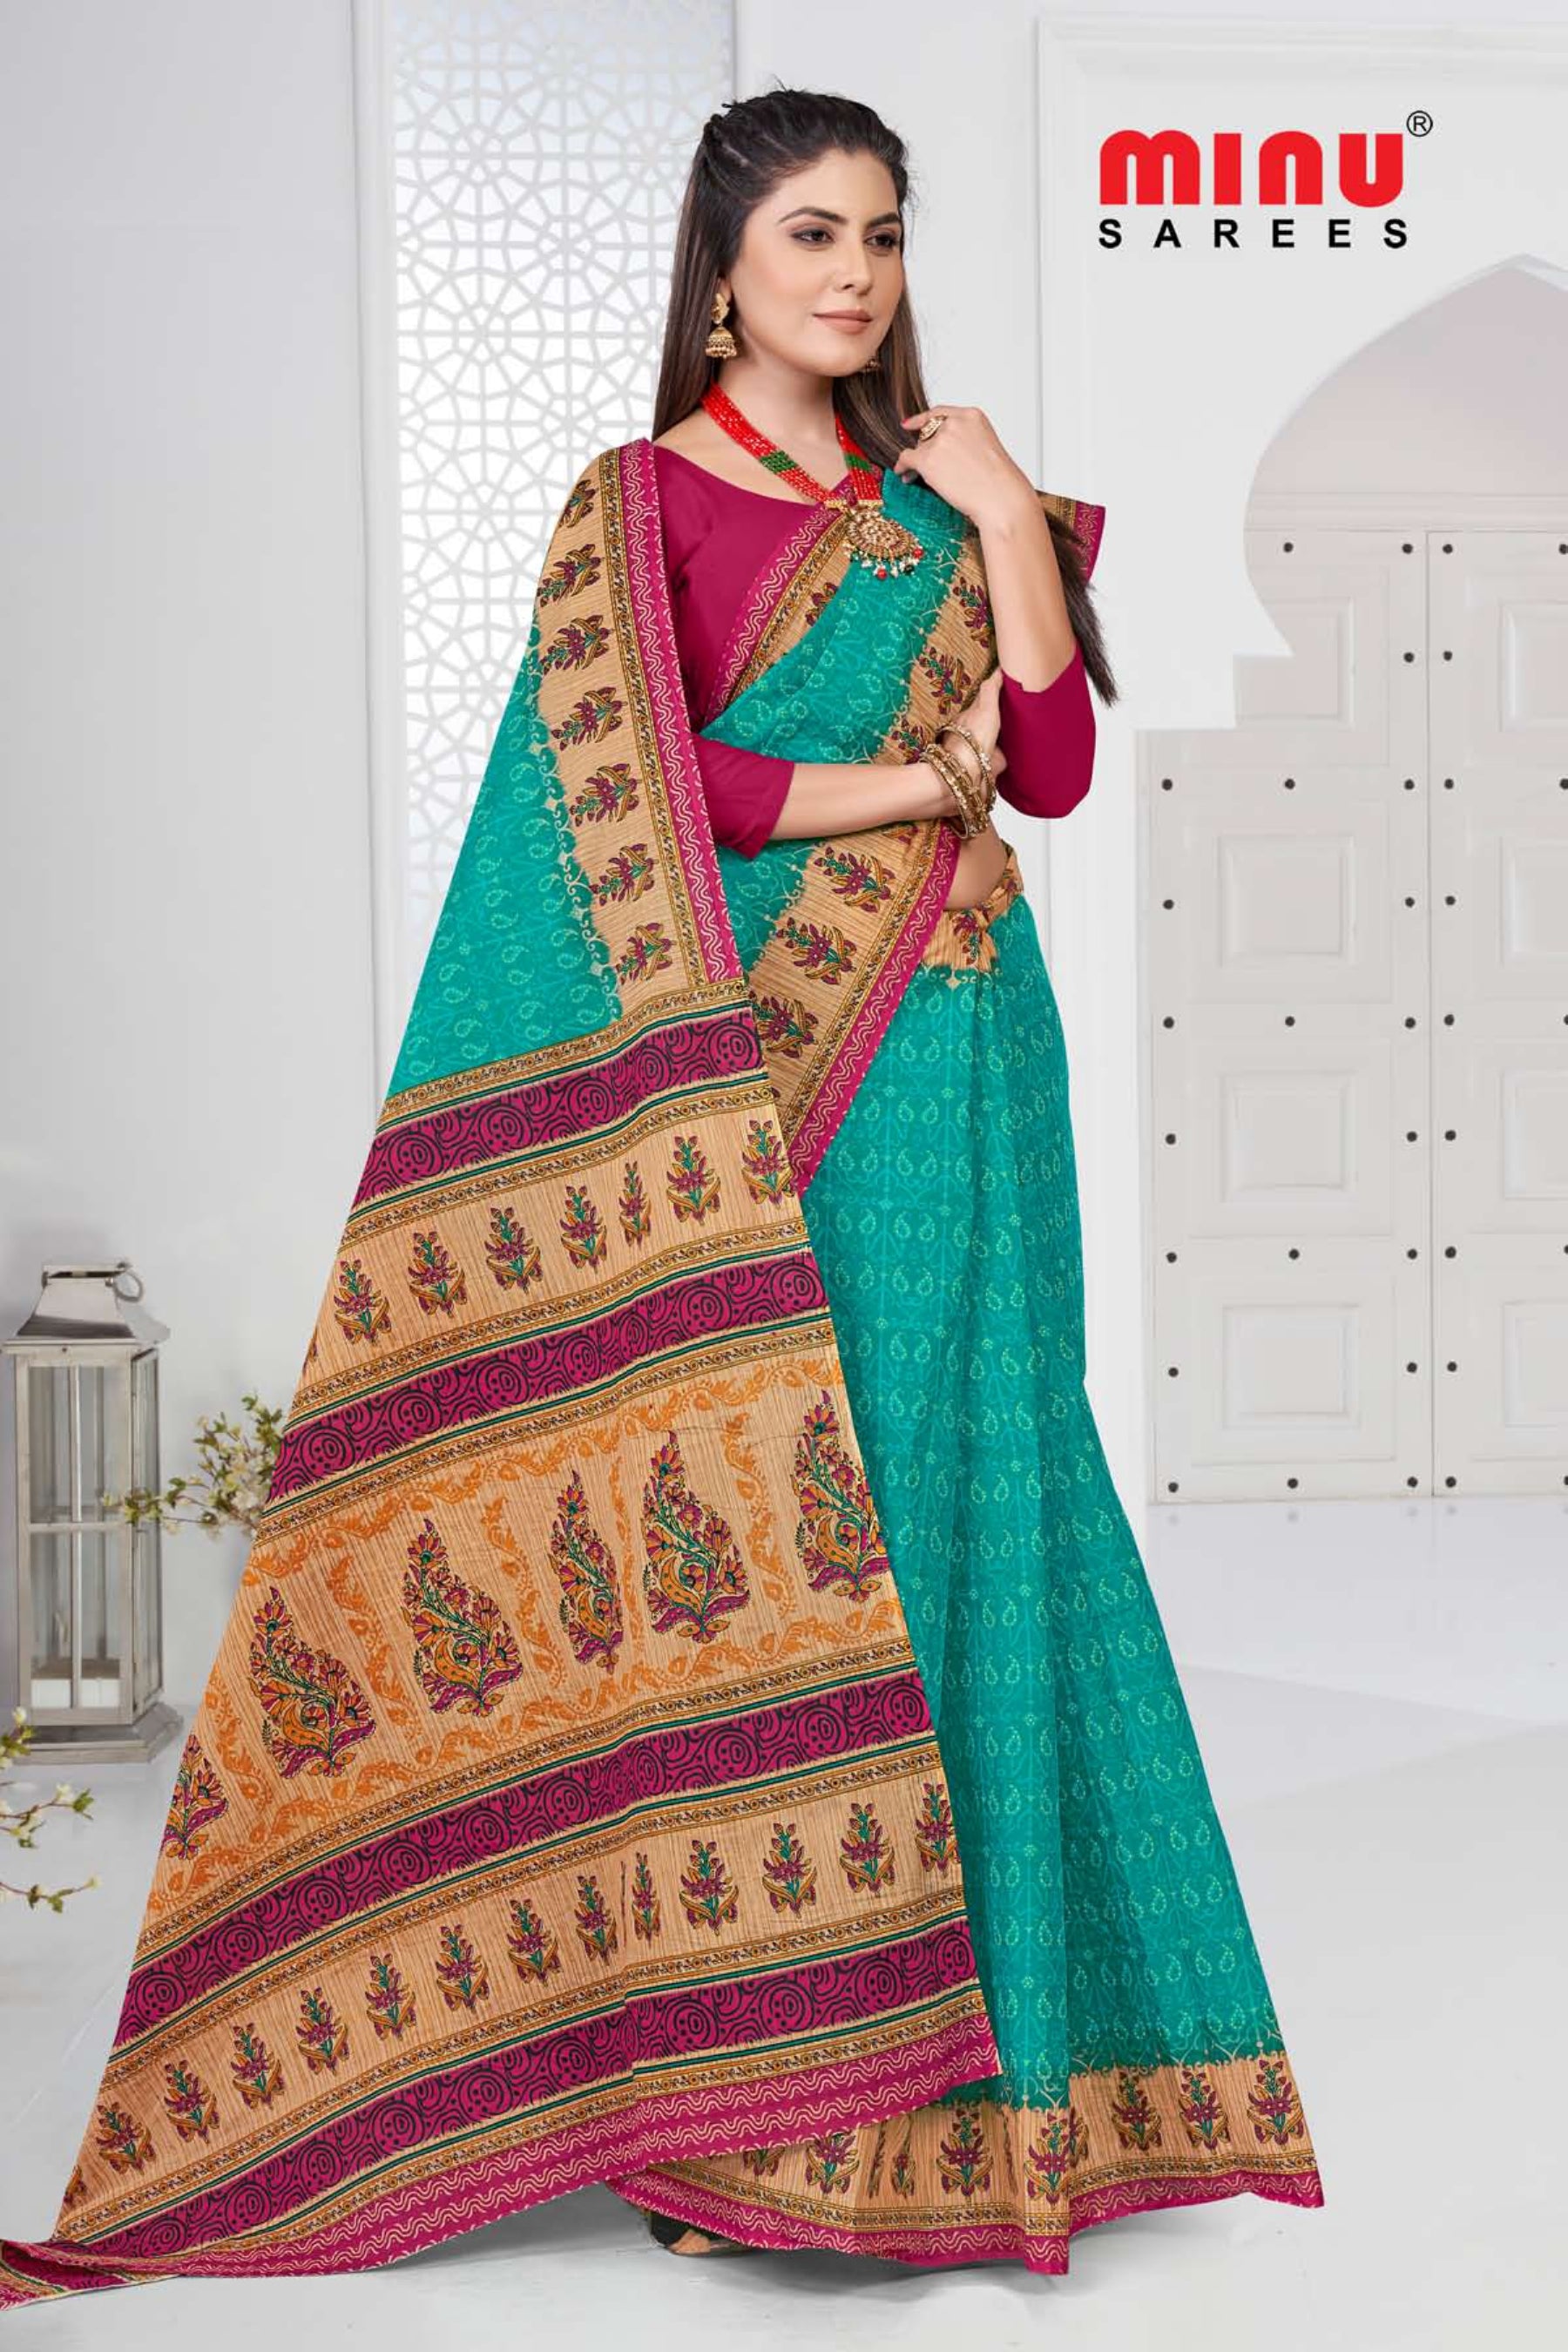 Woman wearing fashionable printed saree